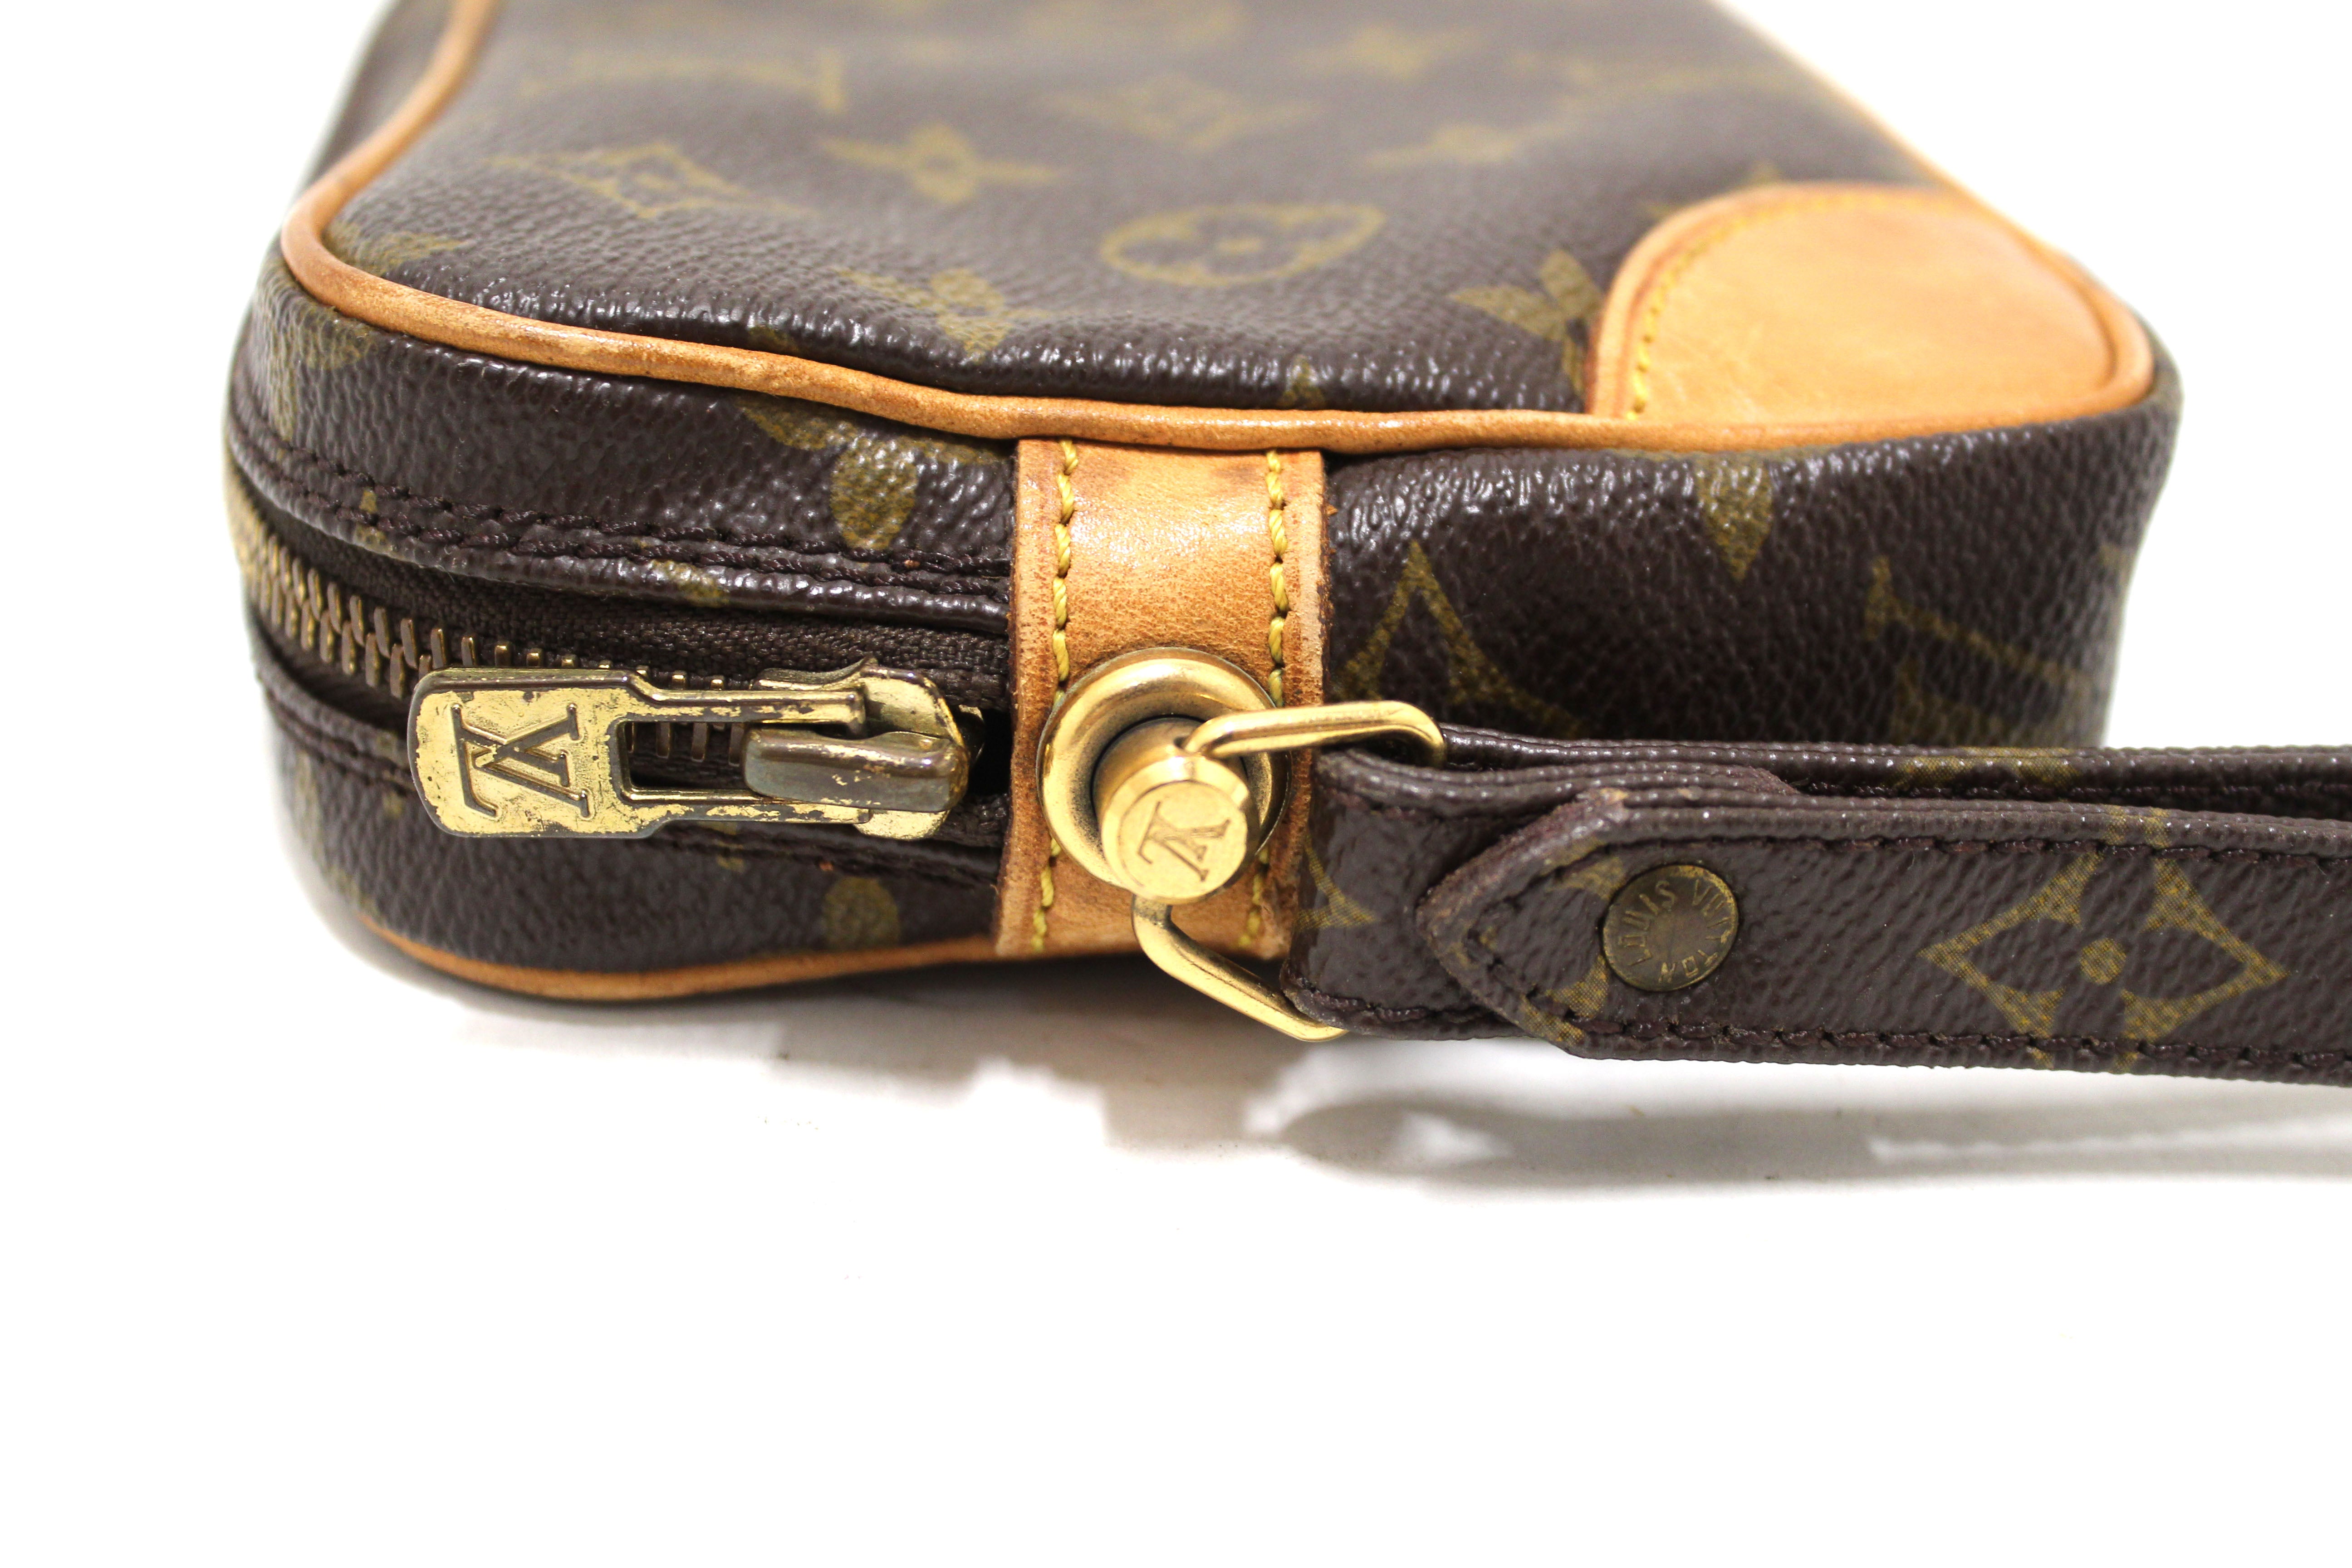 Louis Vuitton, Bags, Louis Vuitton Marly Dragonne Pm Wristlet Euc Vintage